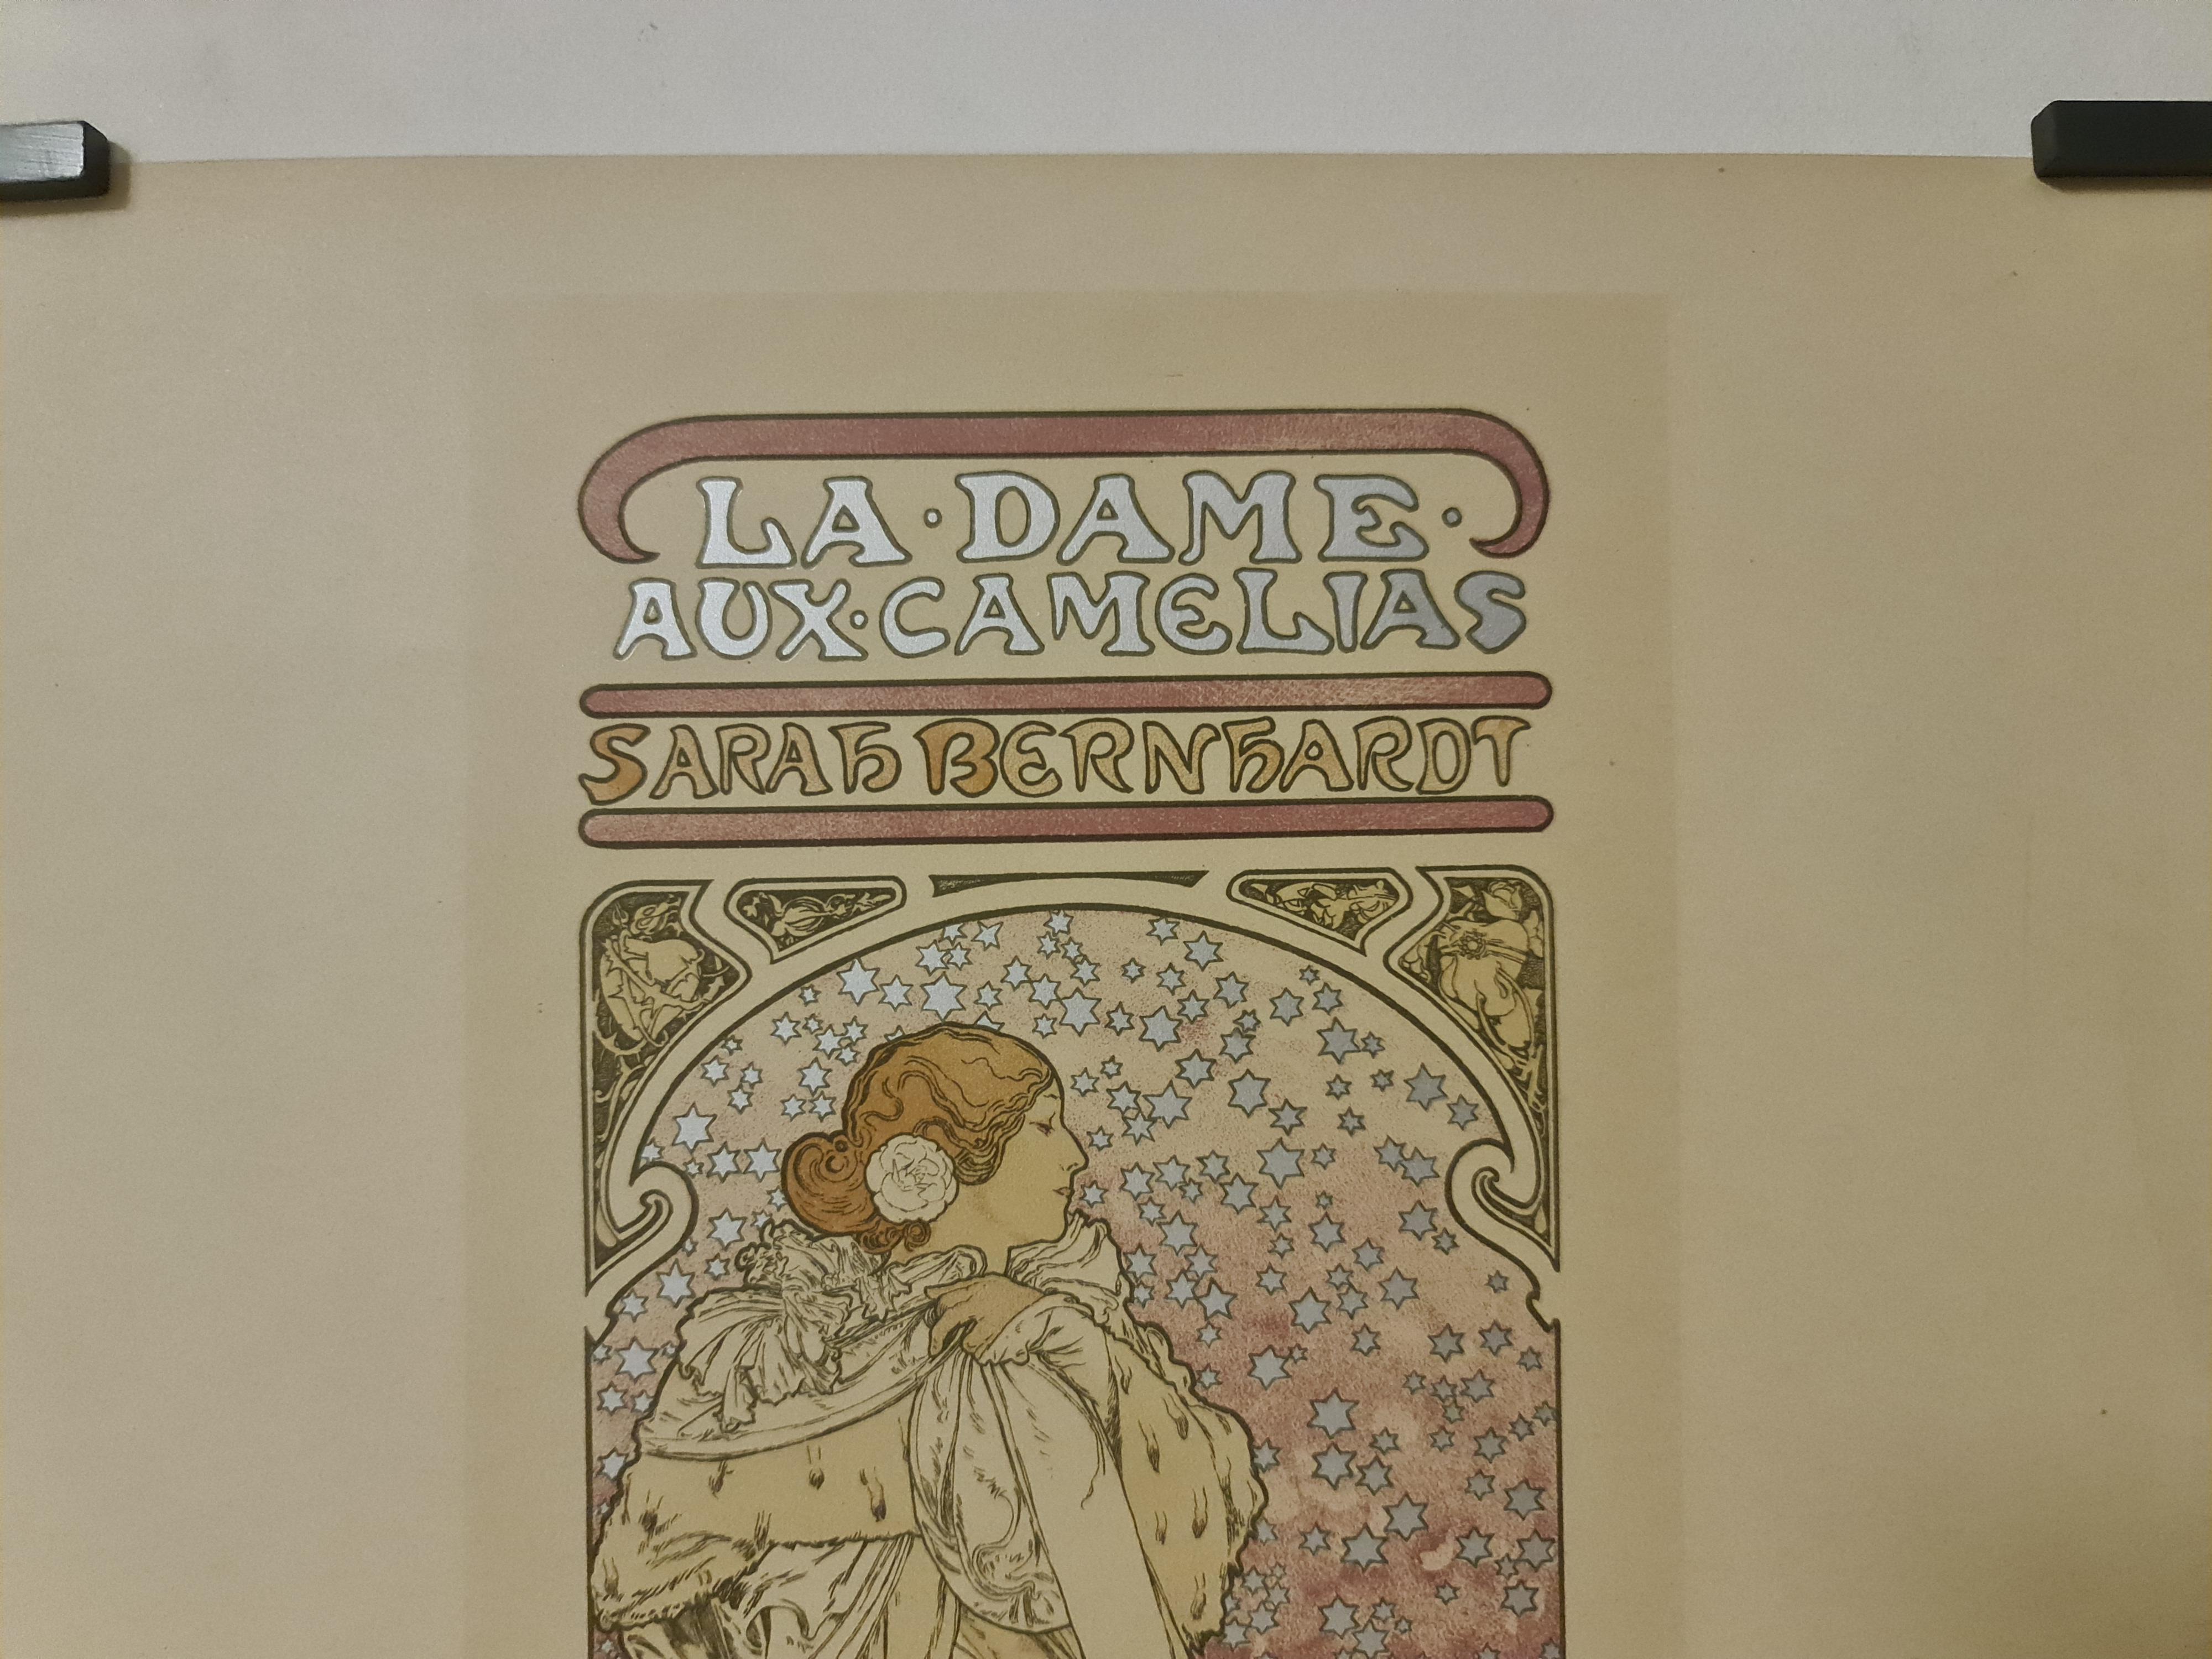 Alphonse Mucha La dame aux Camelias, Sarah Bernhardt, 1898 Original Lithograph in colors (PL. 144).
Printed by Chaix in  Paris and  published by Les Maîtres de l'Affiche.
This plate is from the famous set 